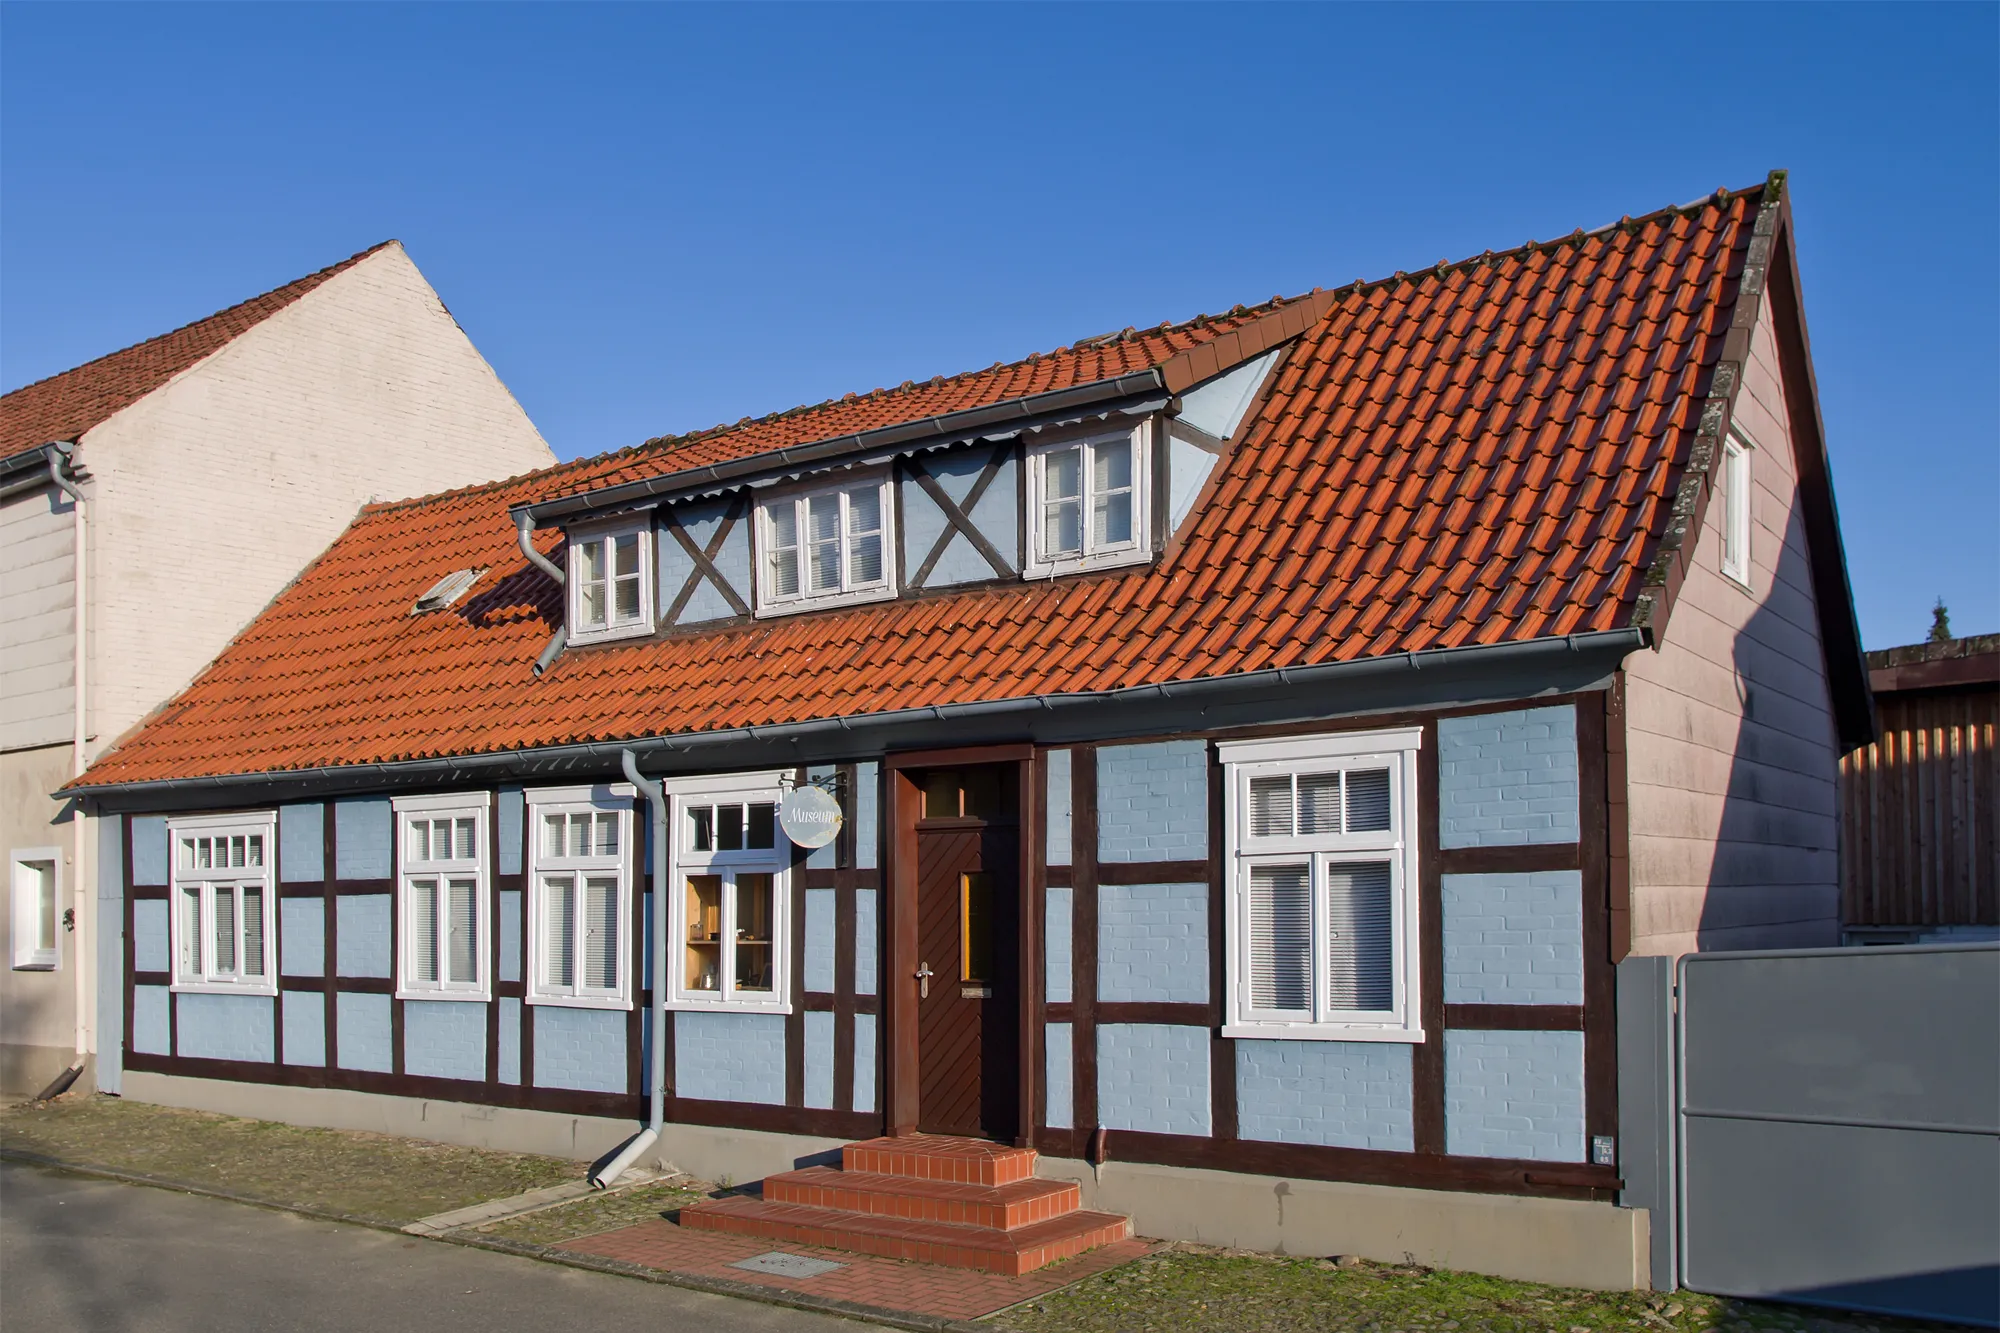 Photo showing: Museum "Das Blaue Haus", building "Kapellenstrasse 7" in Clenze (district Lüchow-Dannenberg, northern Germany).